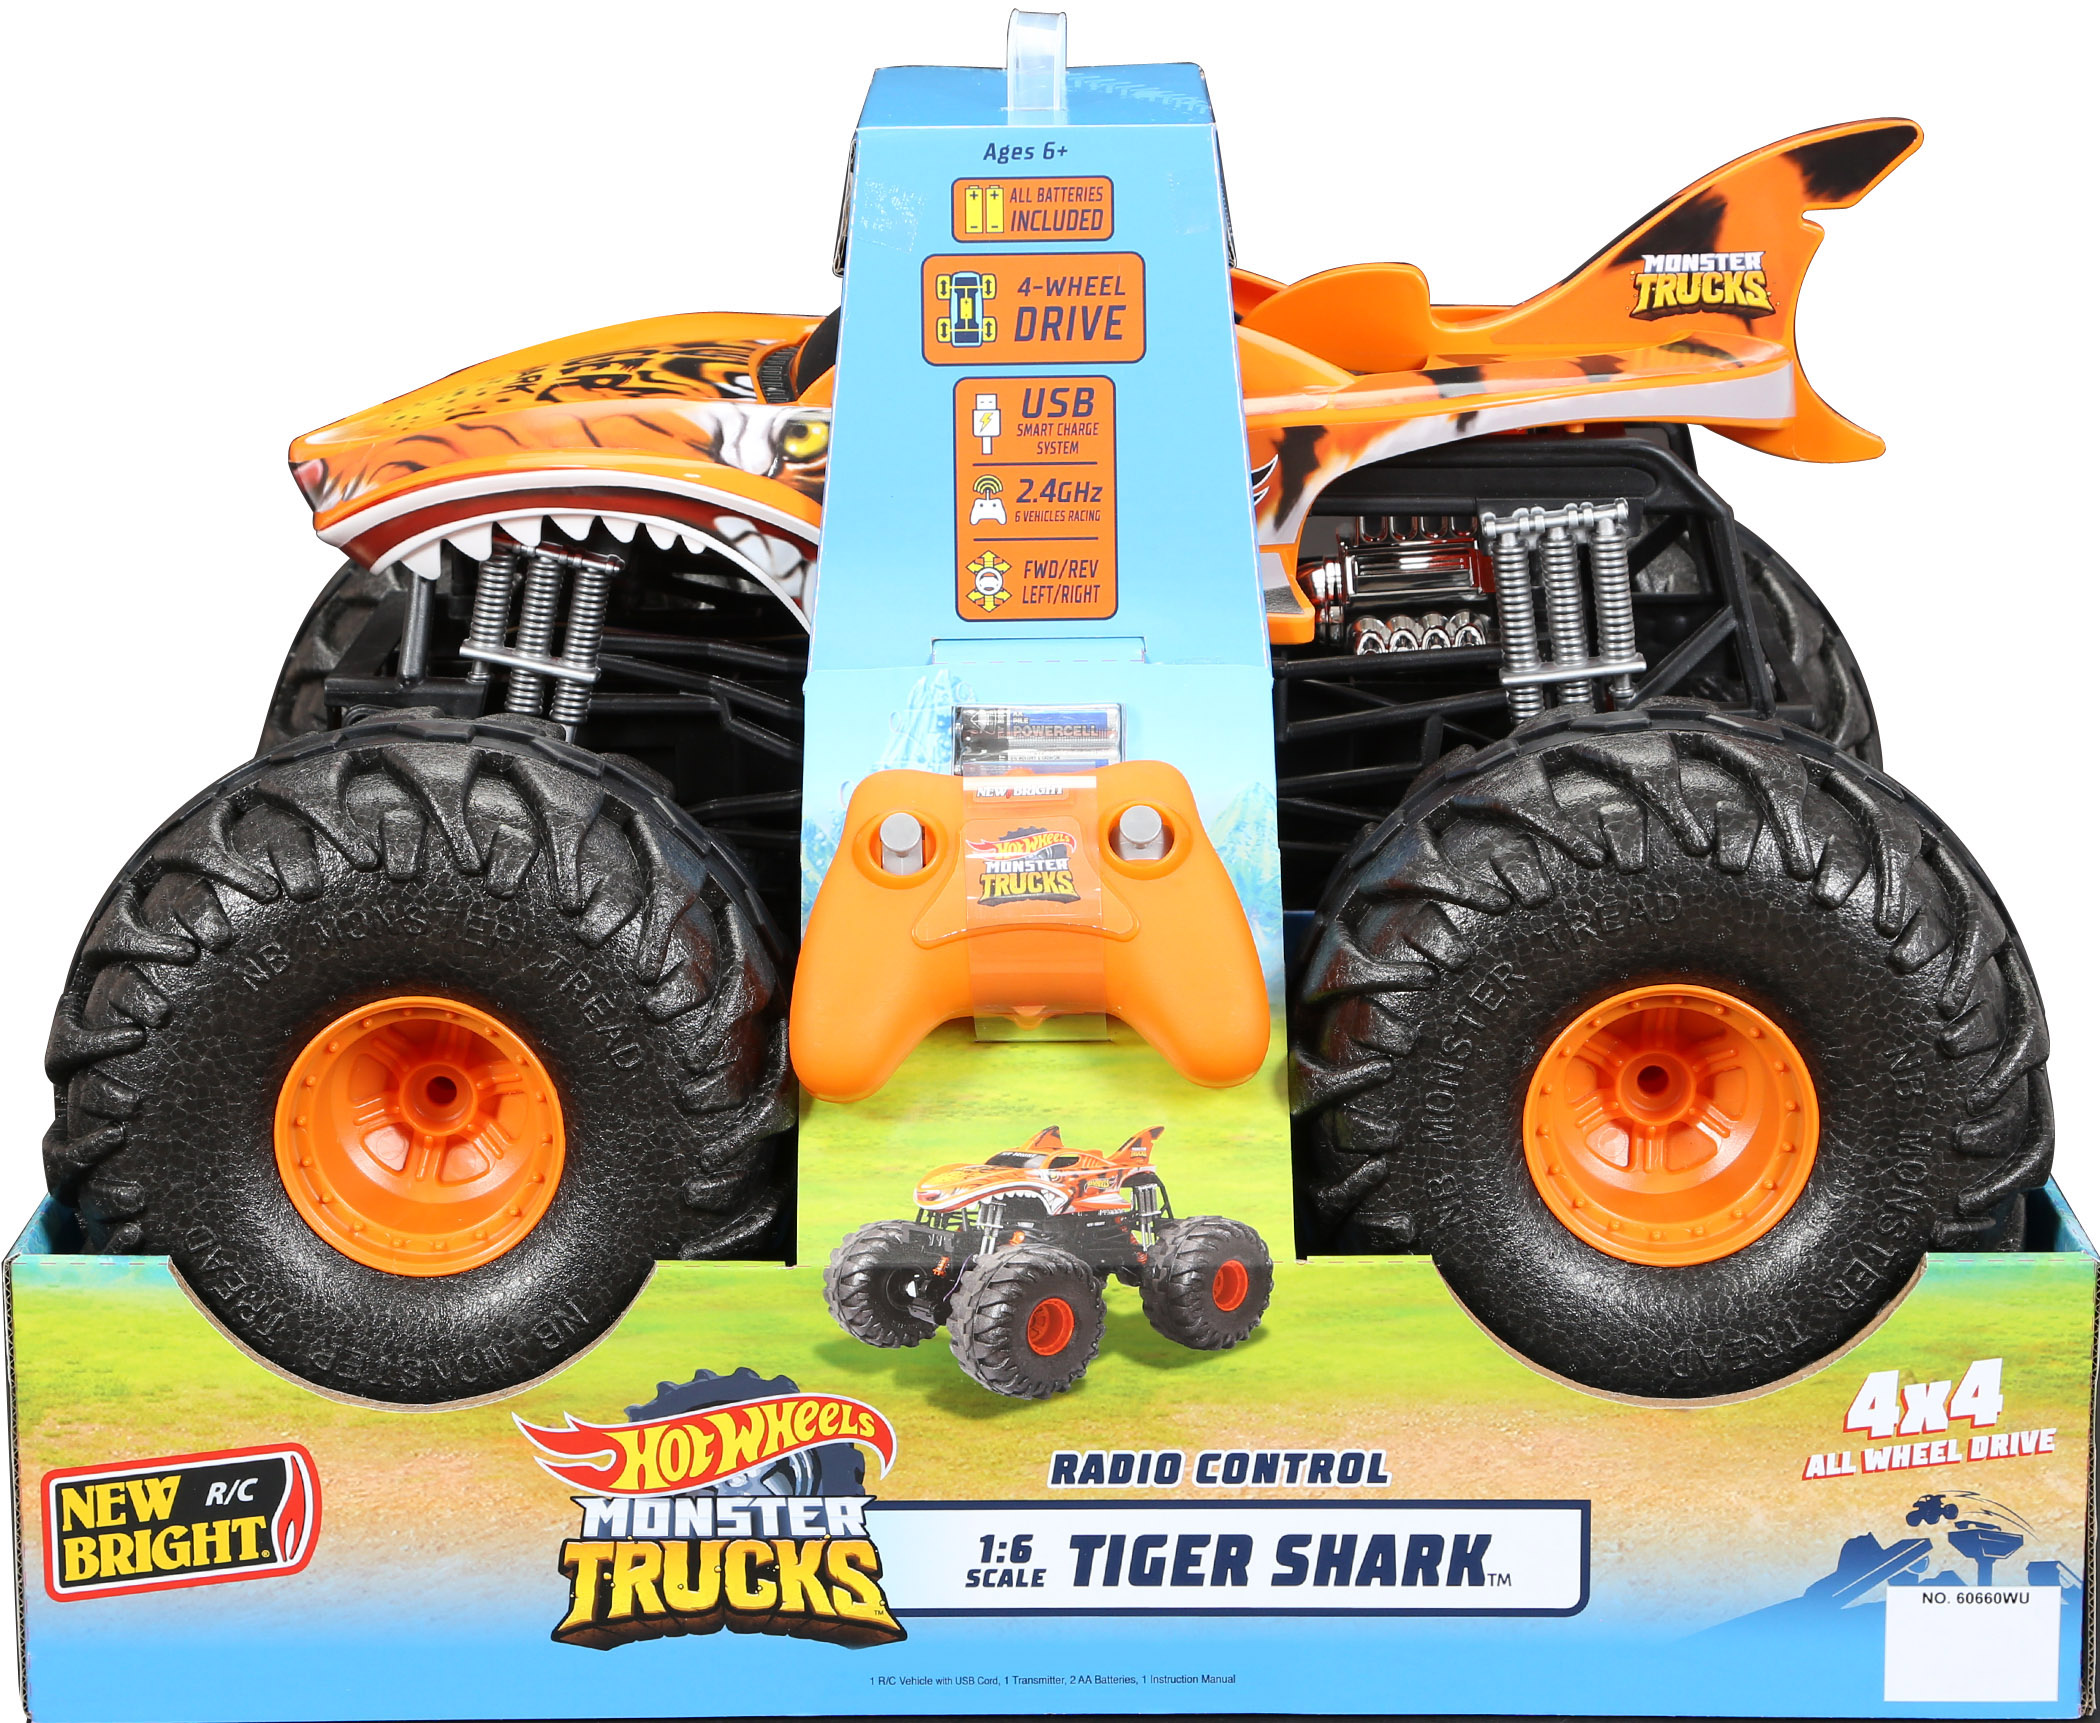 New Bright (1:6) Hot Wheels Tiger Shark Battery Radio Control Monster Truck, 60660WU Orange - image 2 of 8